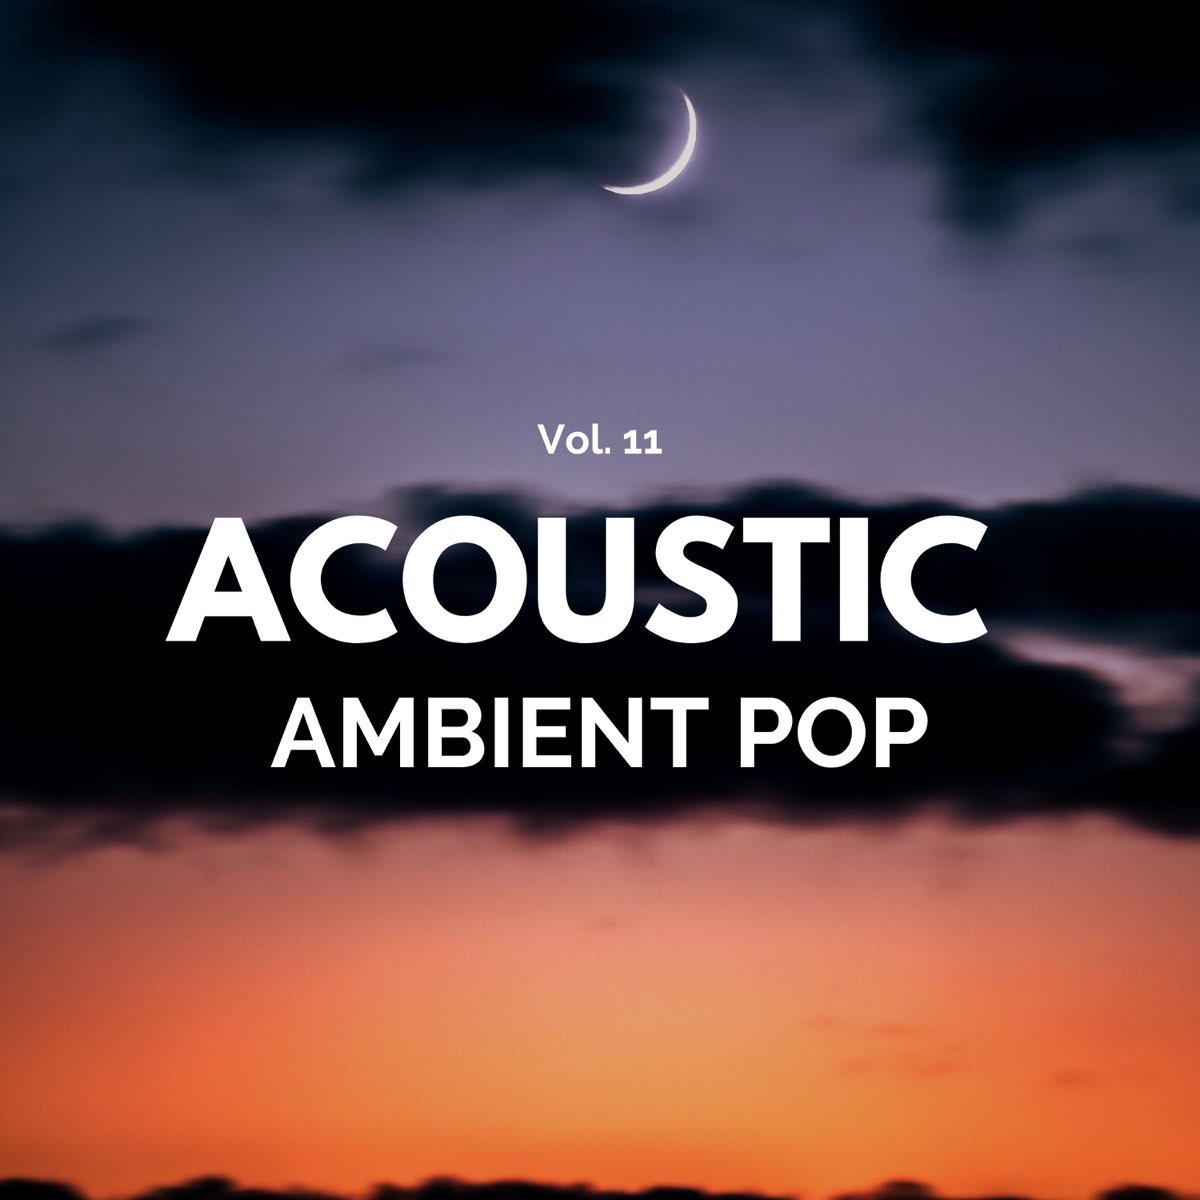 Acoustic Ambient Pop - Vol. 11 - Album by Various Artists - Apple Music